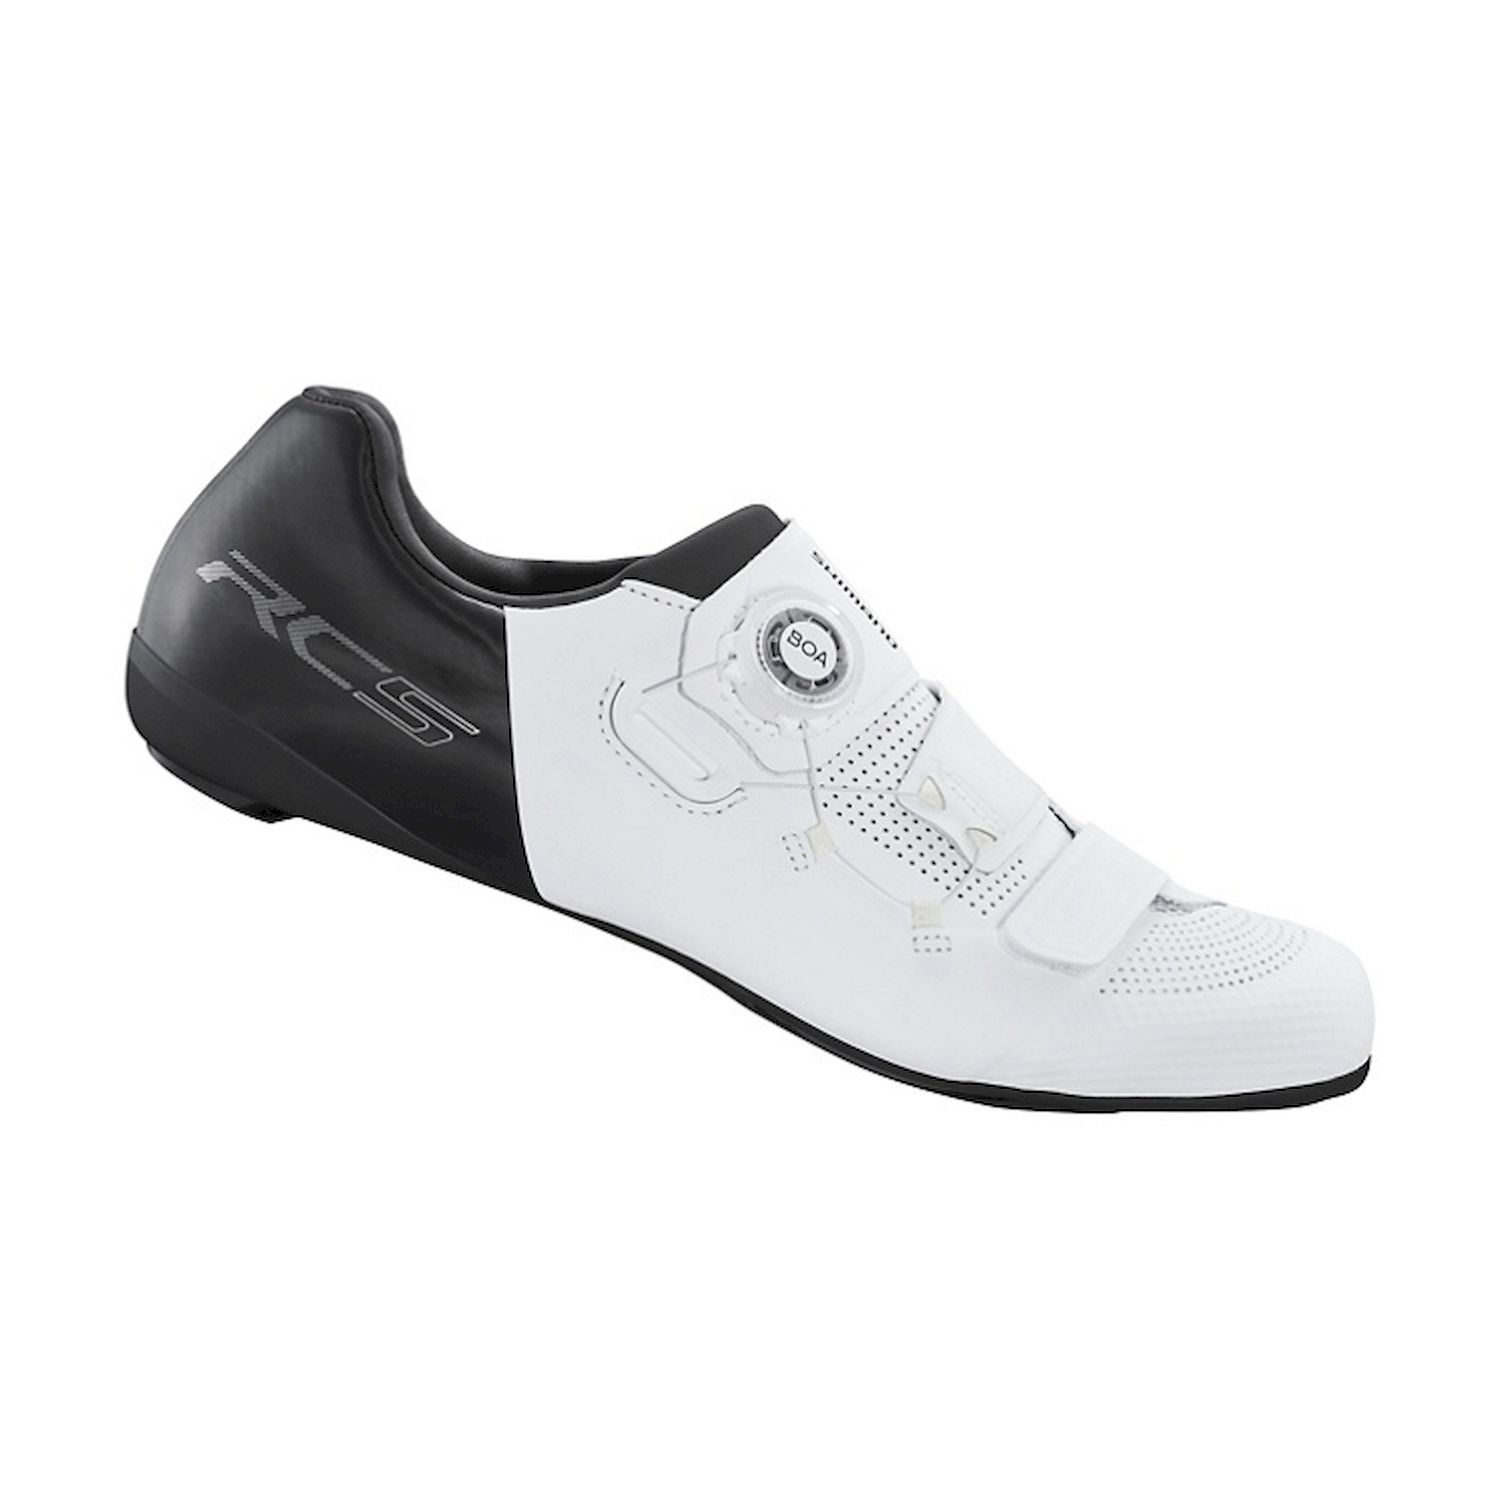 Shimano Route RC502 - Cycling shoes - Men's